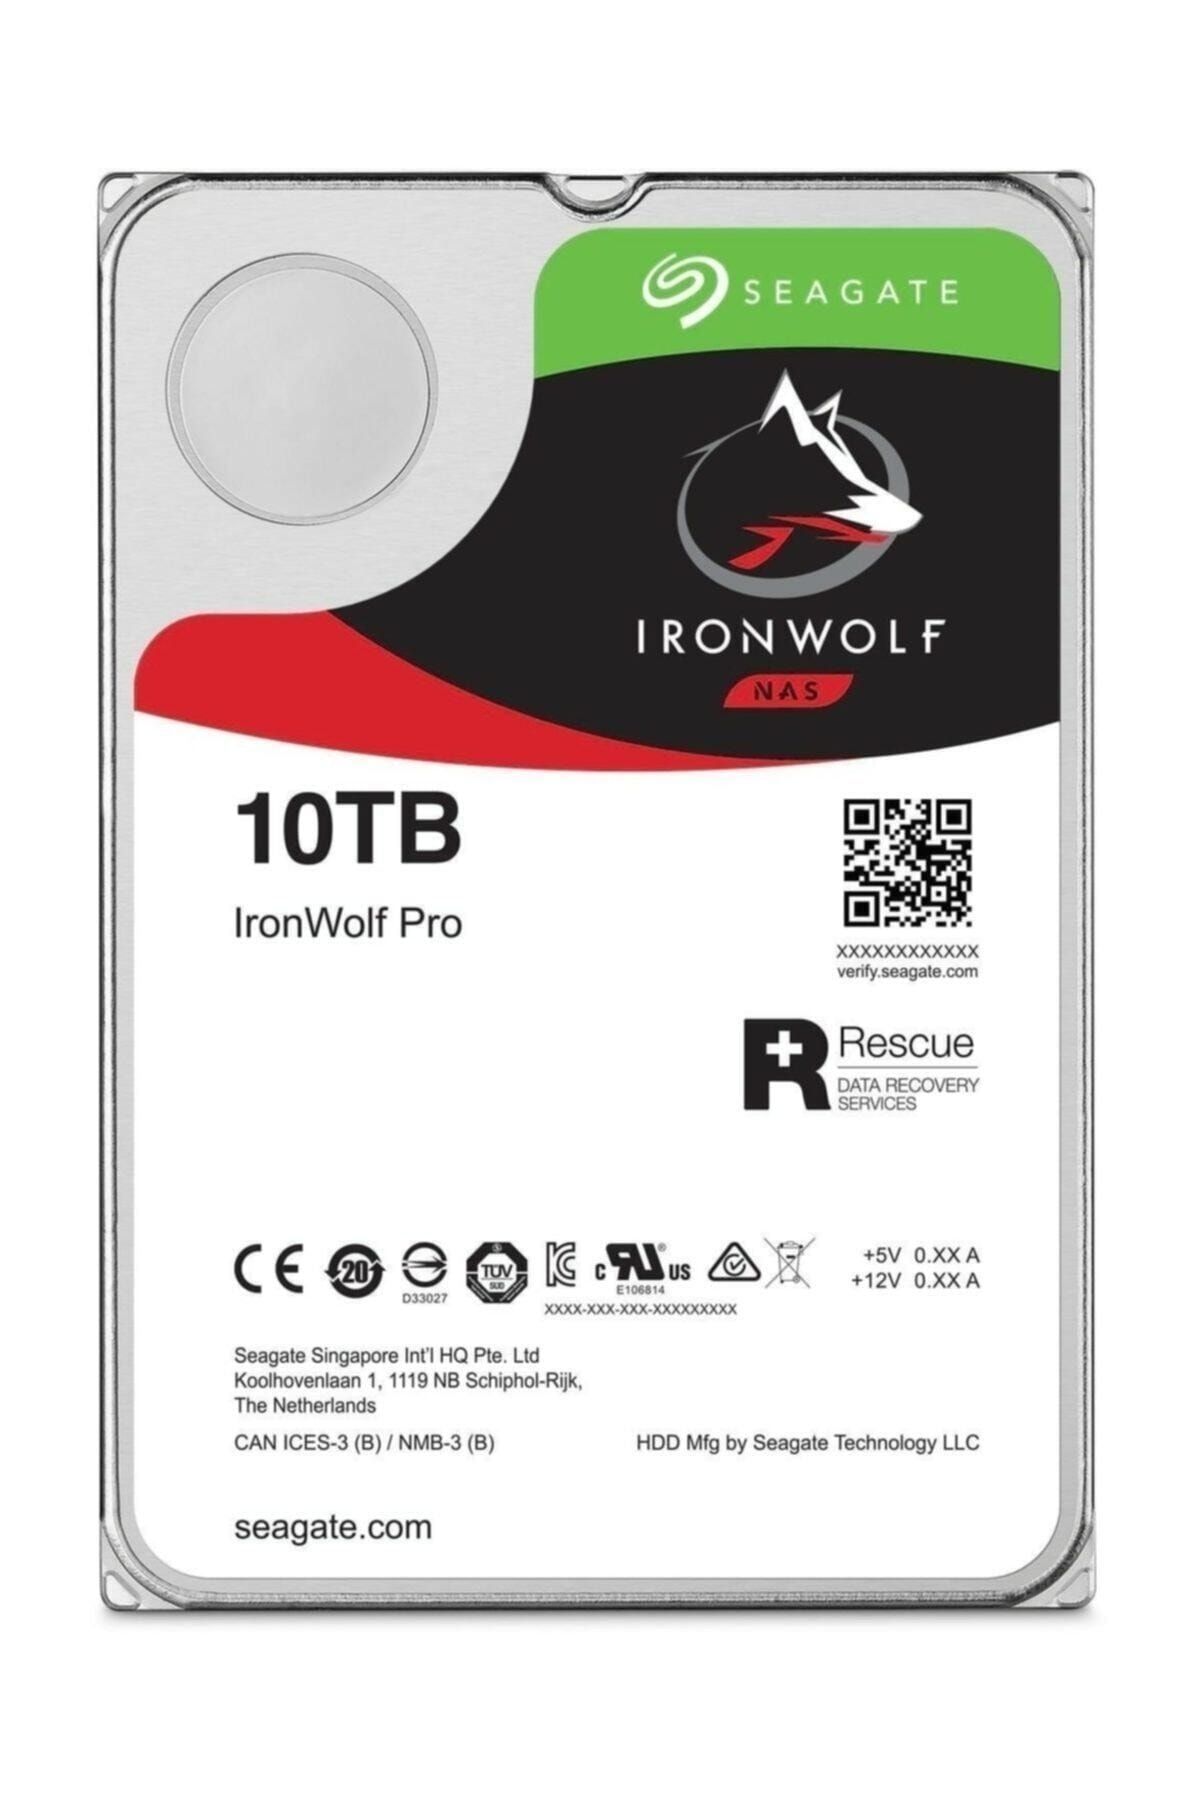 NEW Seagate IronWolf Pro ST10000NE0008 10TB 3.5 7200RPM 256MB NAS Hard  Drive